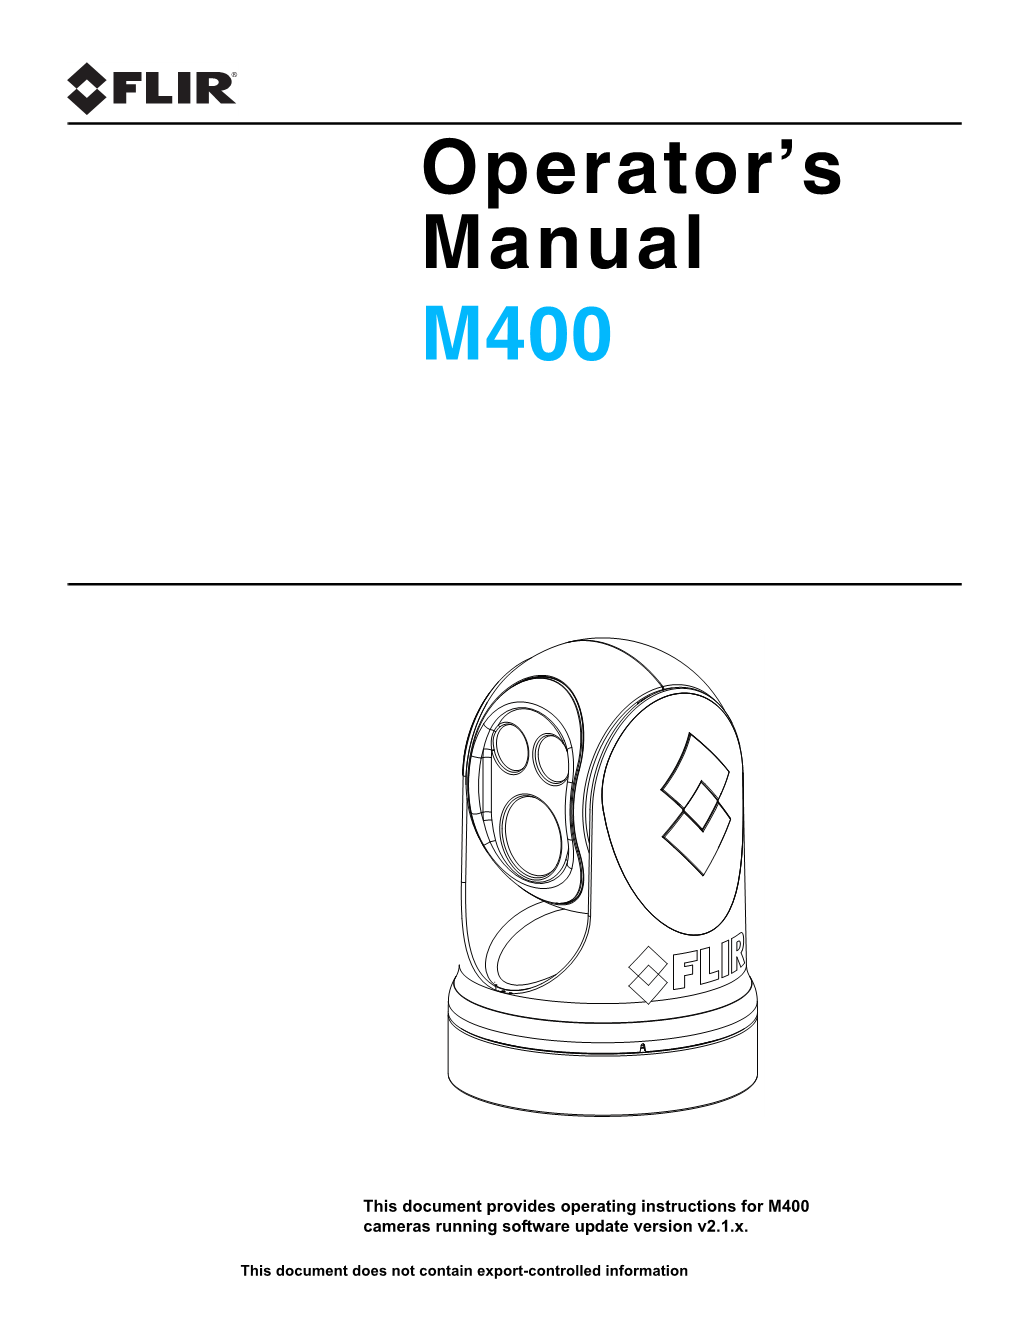 432-0012-02-10 M400 Operators Manual